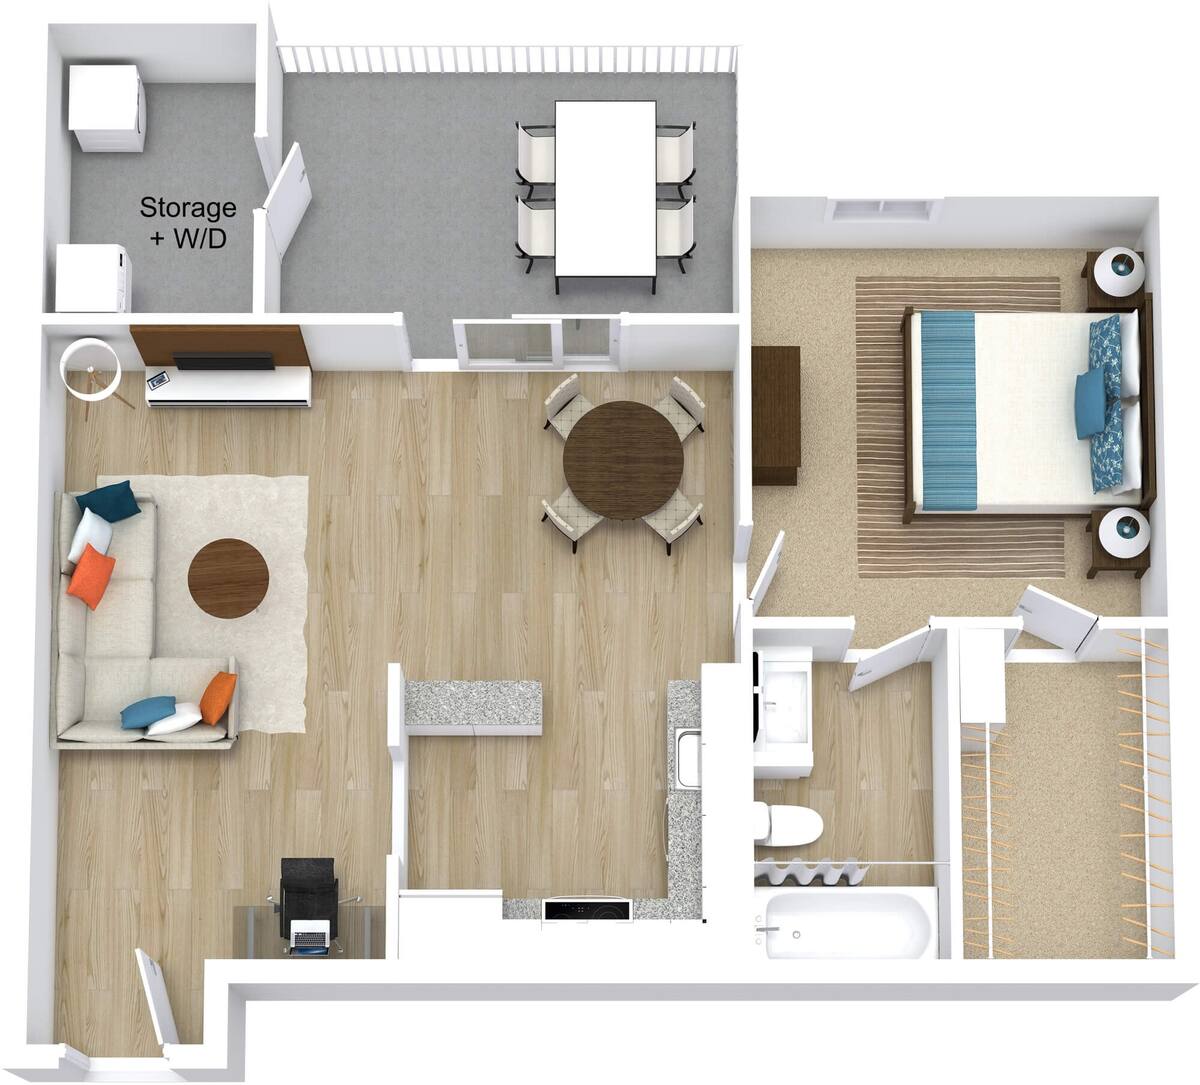 Floorplan diagram for Current, showing 1 bedroom